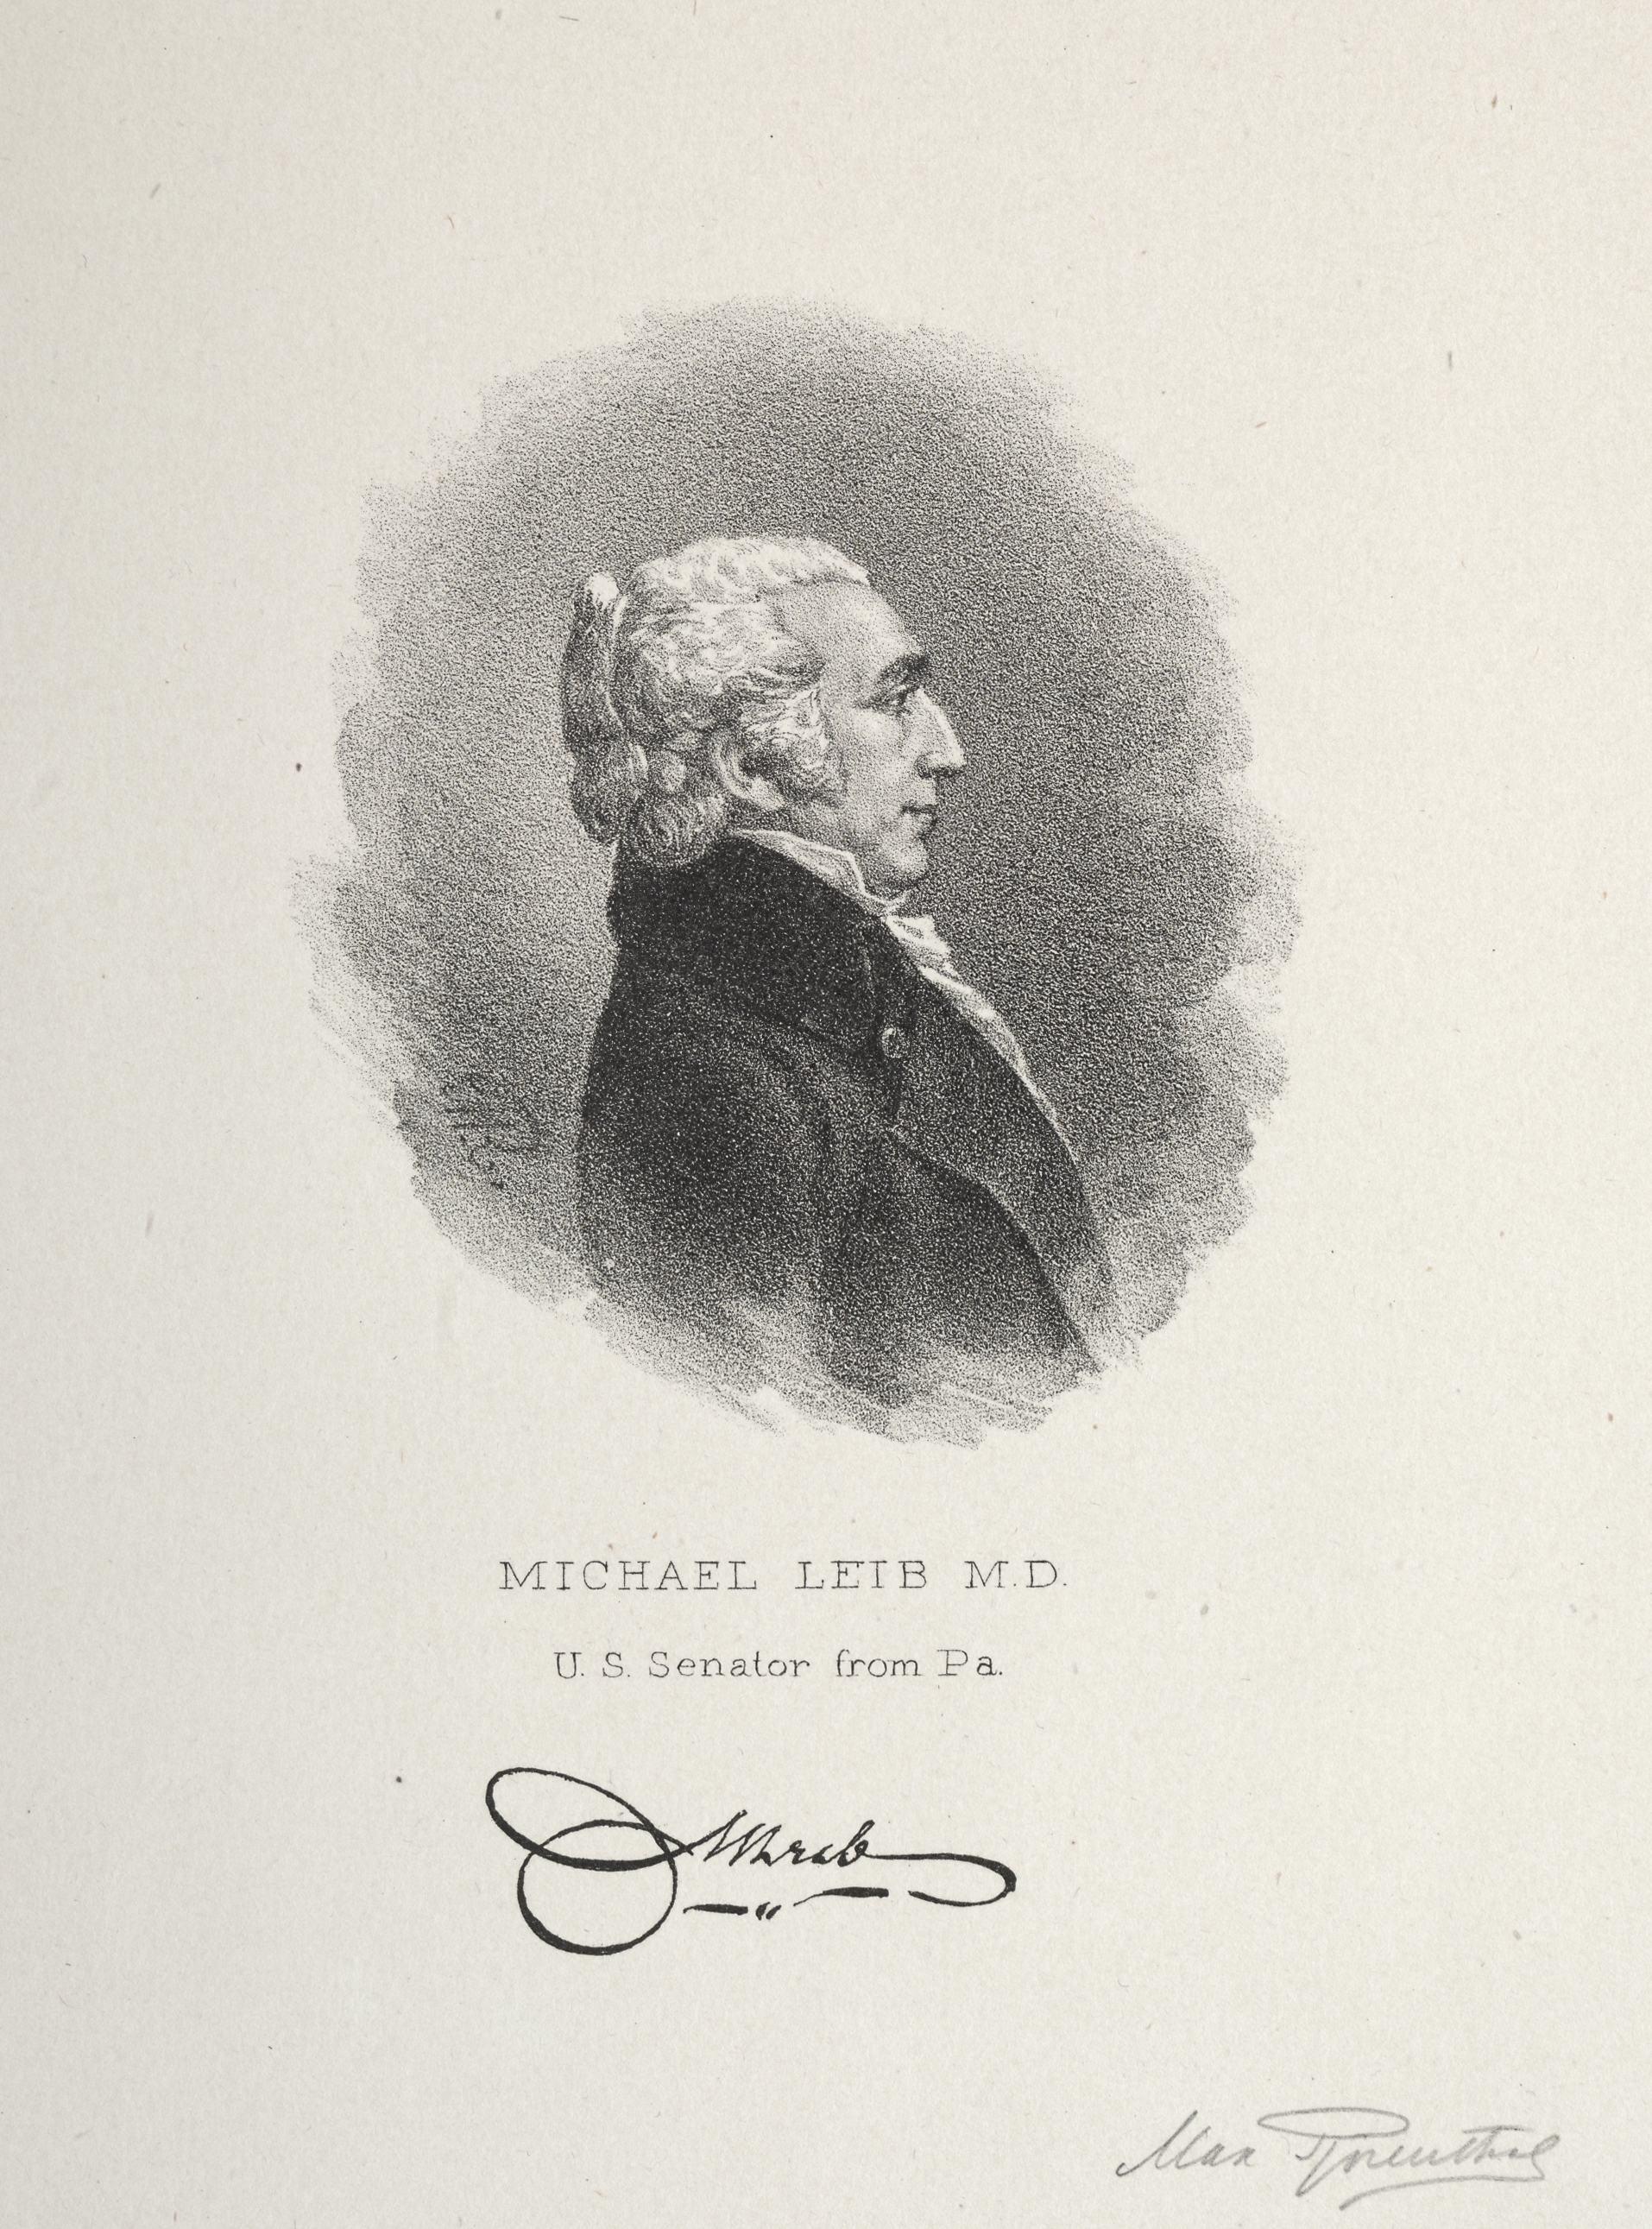 Michael Lieb, M. D.